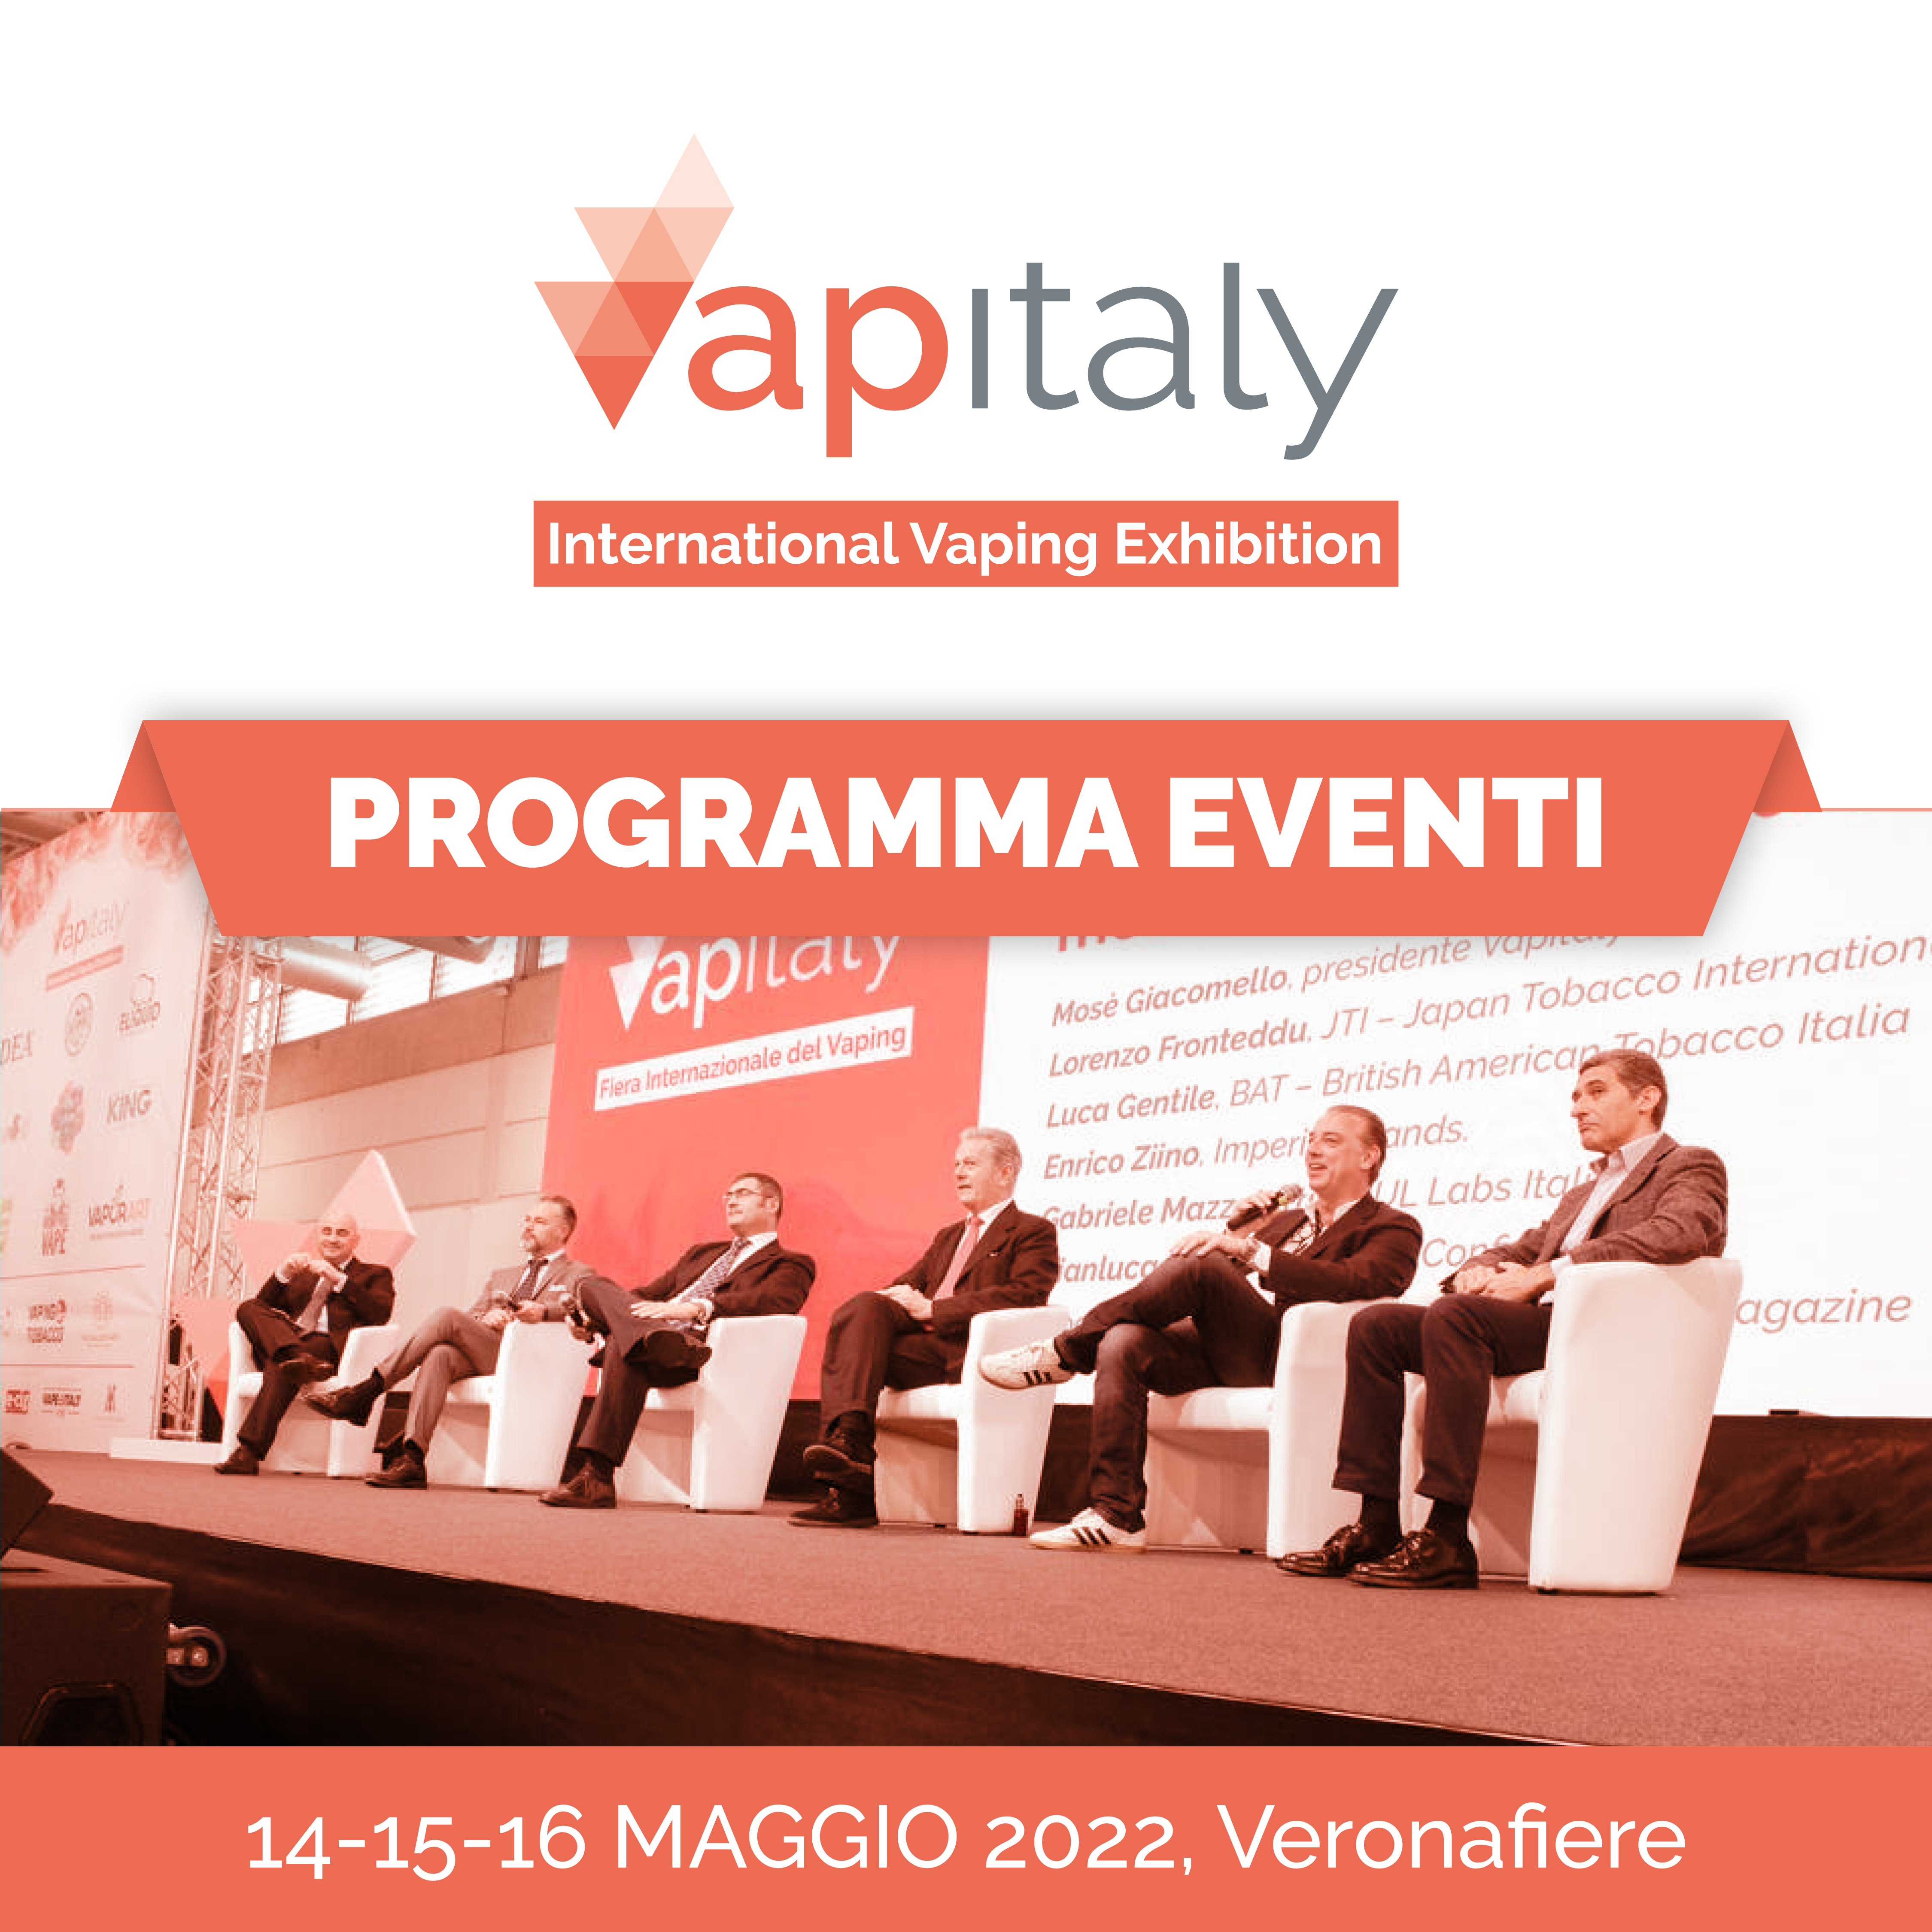 Vapitaly 2022: dal 14 maggio, a Verona la fiera del vaping